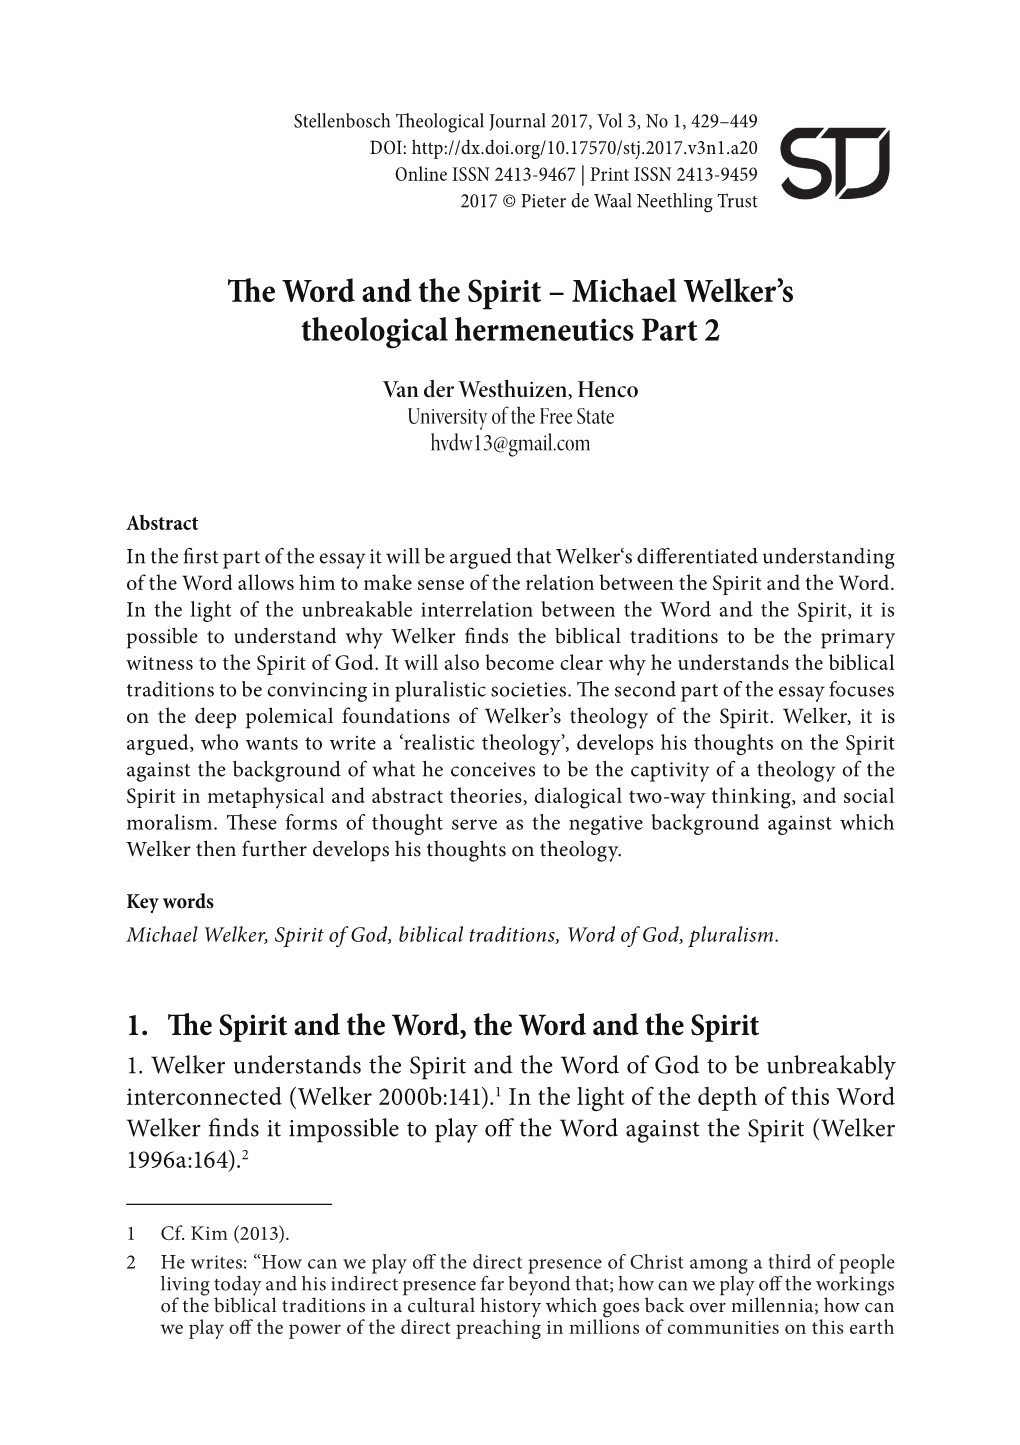 Michael Welker's Theological Hermeneutics Part 2